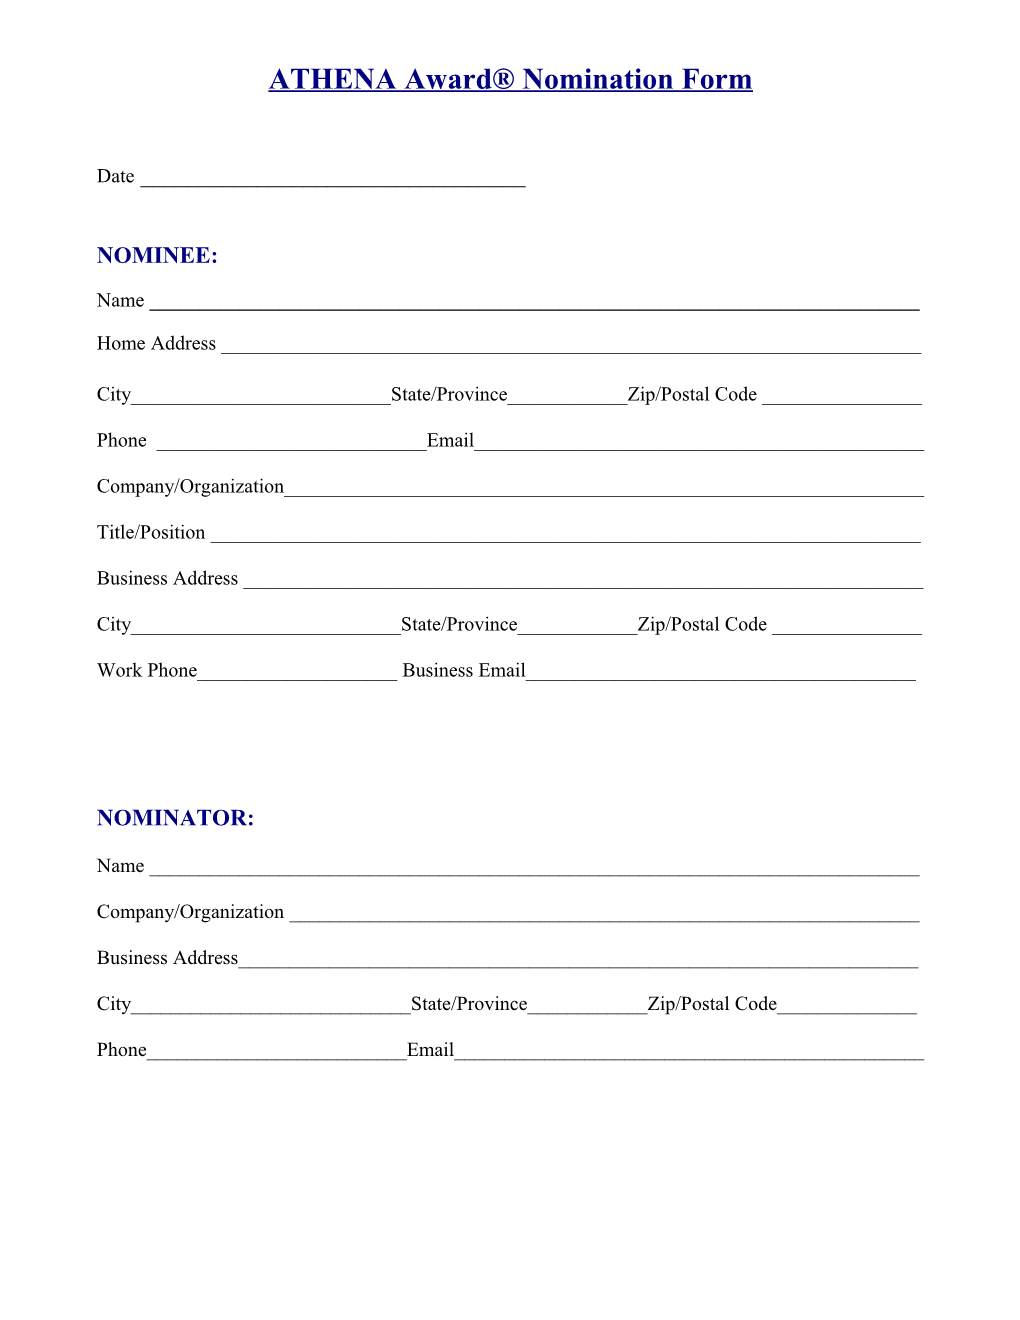 ATHENA Award Nomination Form